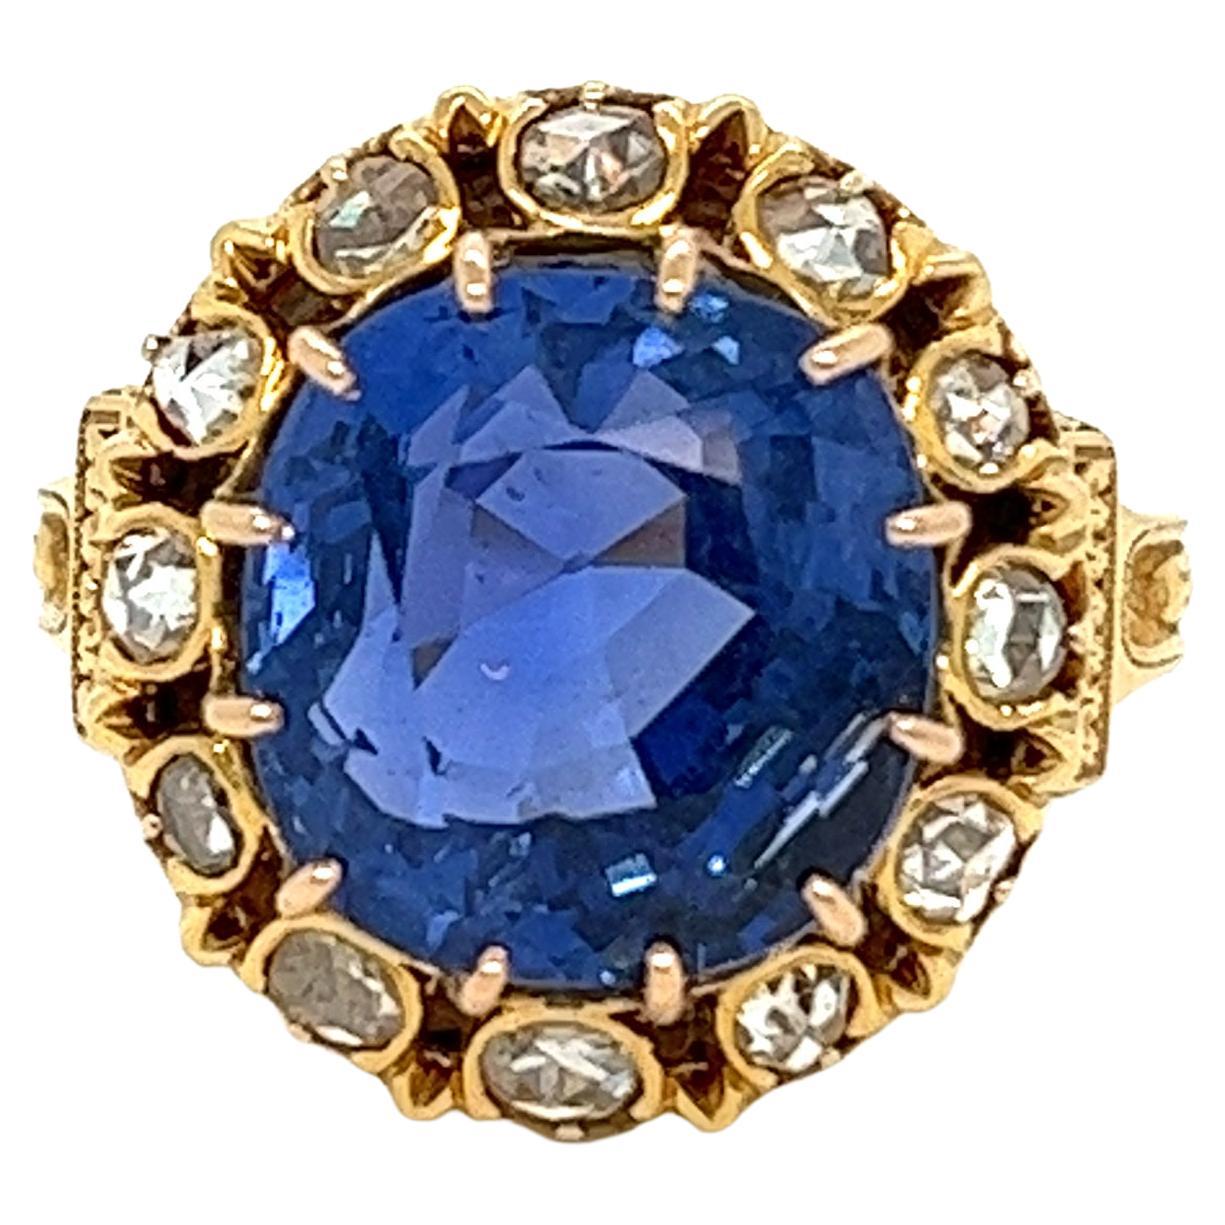 Victorian 10.74 ct. Burma Sapphire Ring SSEF Certified 18kt YG